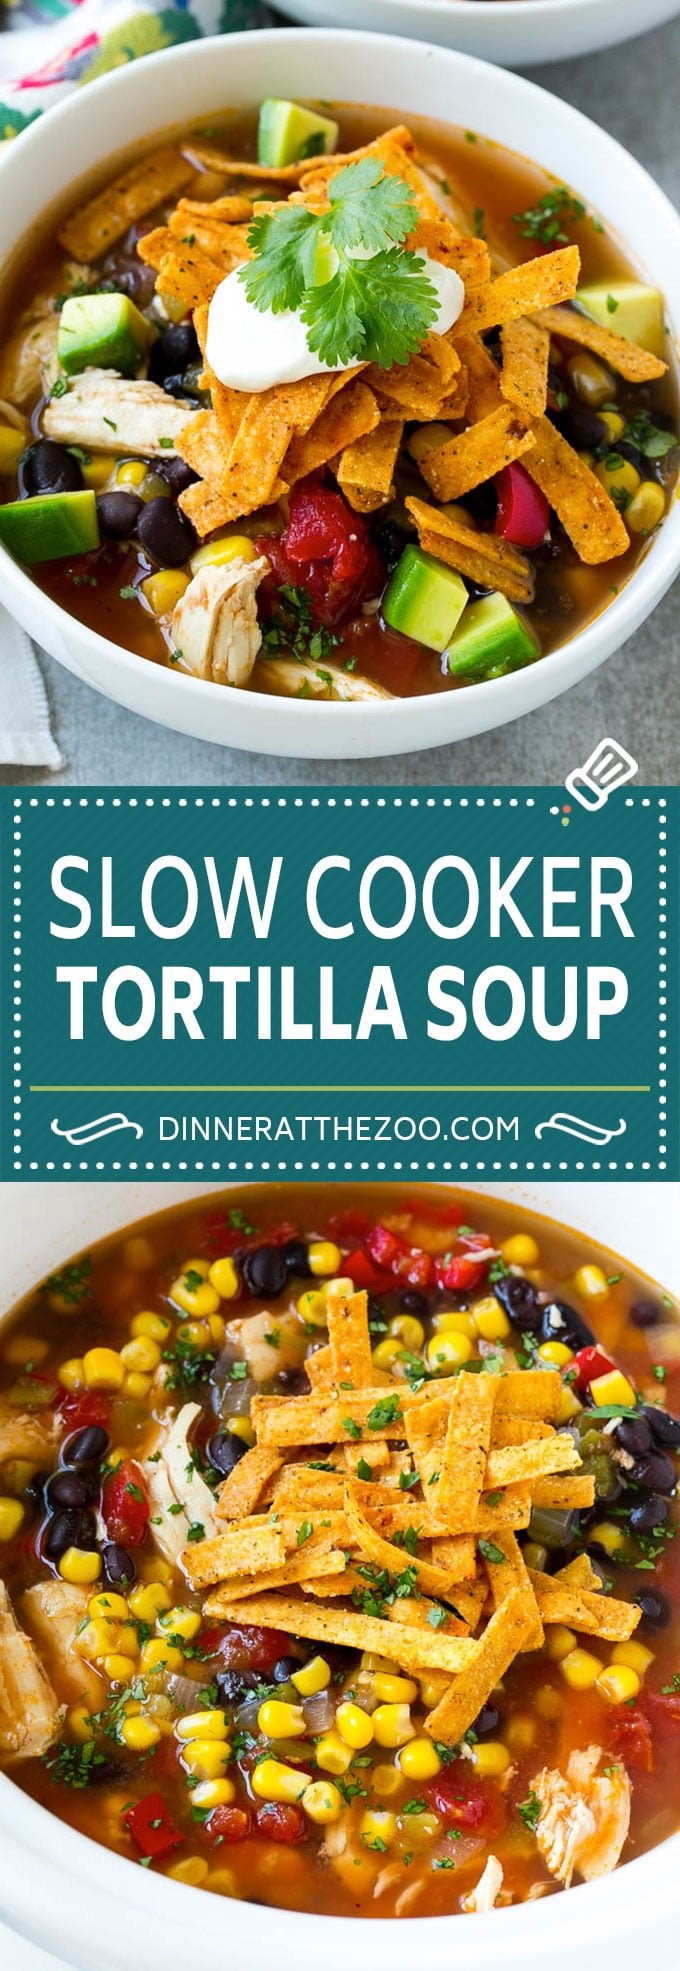 Slow Cooker Chicken Tortilla Soup Recipe | Chicken Soup Recipe | Slow Cooker Chicken Soup | Mexican Chicken Soup | Tortilla Soup Recipe #soup #tortillasoup #chickensoup #mexican #mexicansoup #dinner #dinneratthezoo